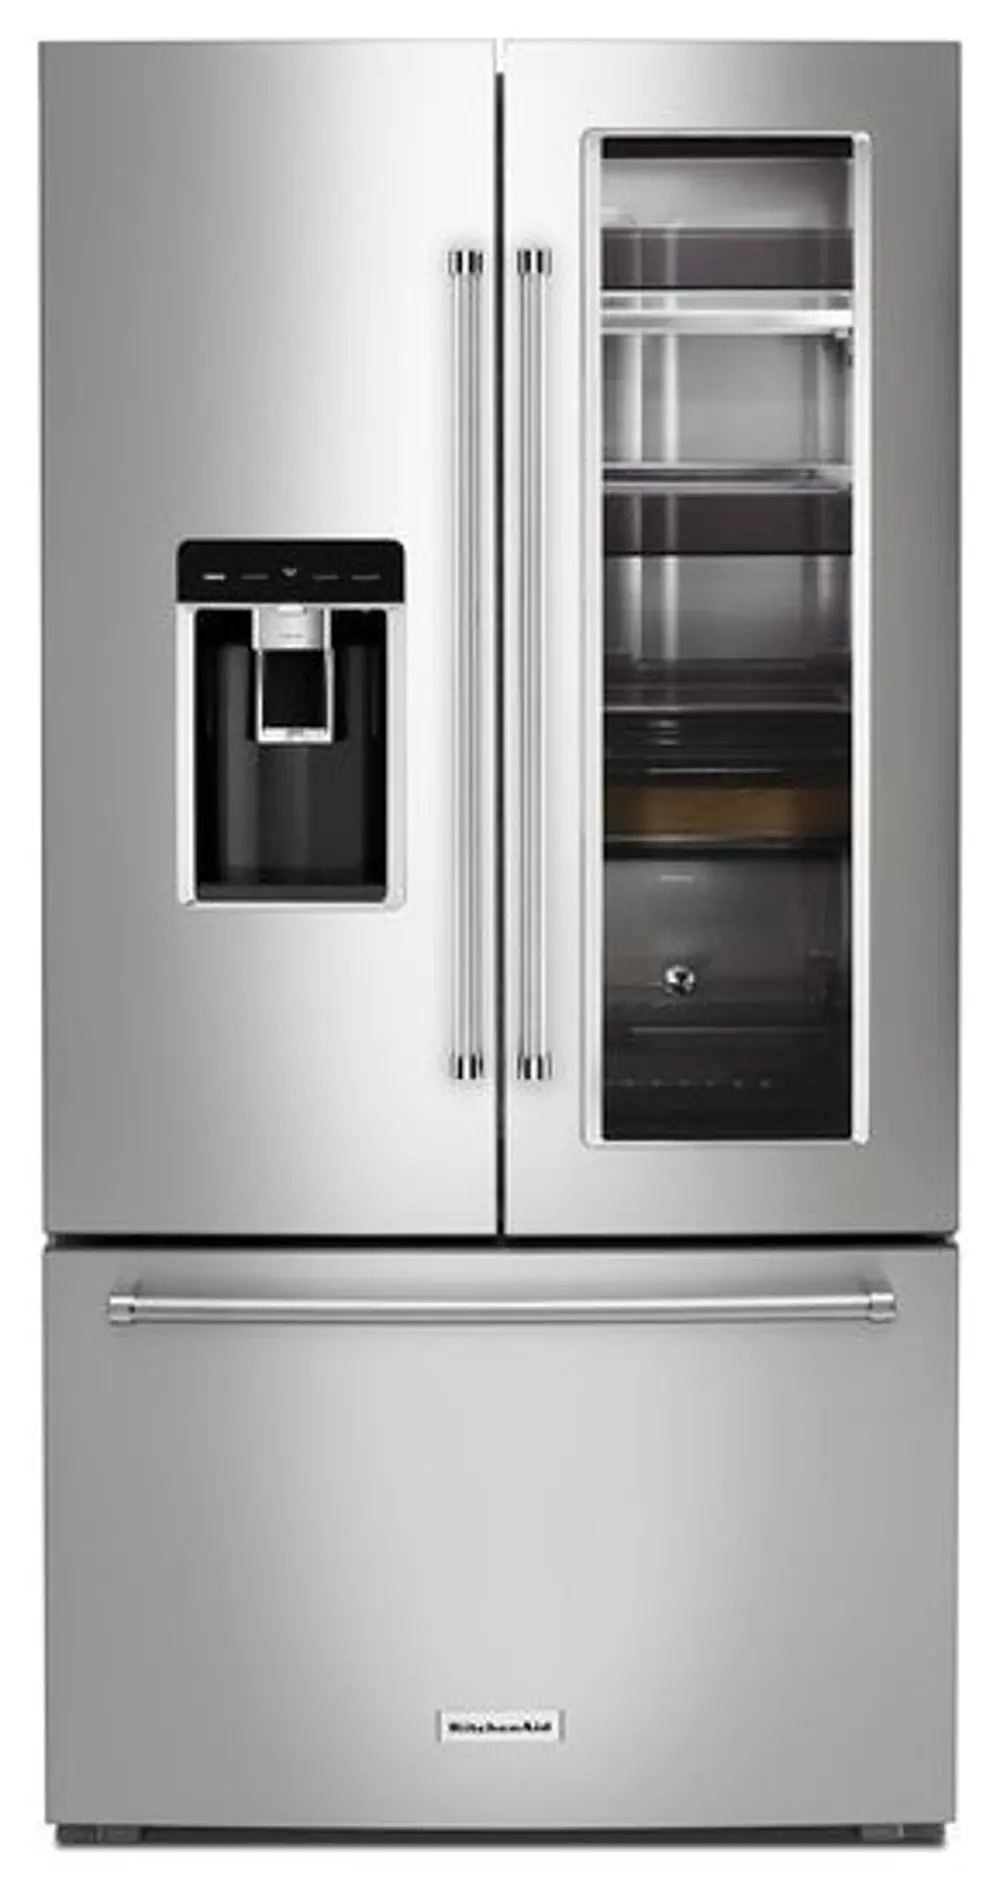 KRFC804GPS KitchenAid Counter Depth French Door Smart Refrigerator - 23.5 cu. ft., 36 Inch Stainless Steel-1